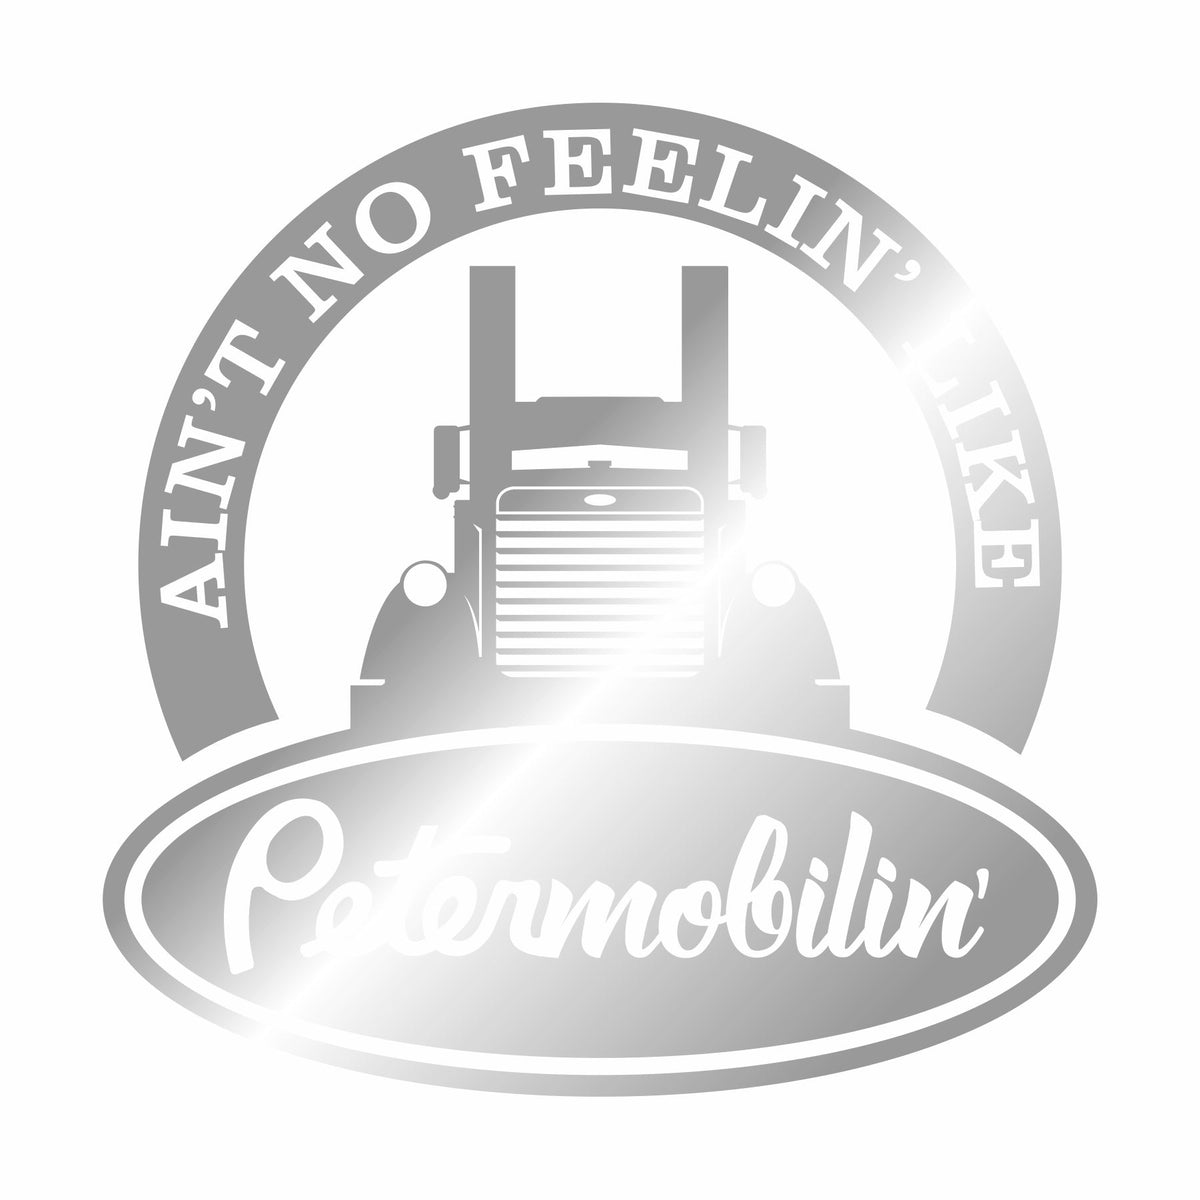 Ain't No Feelin' Like Petermobilin' - Vinyl Decal - Free Shipping